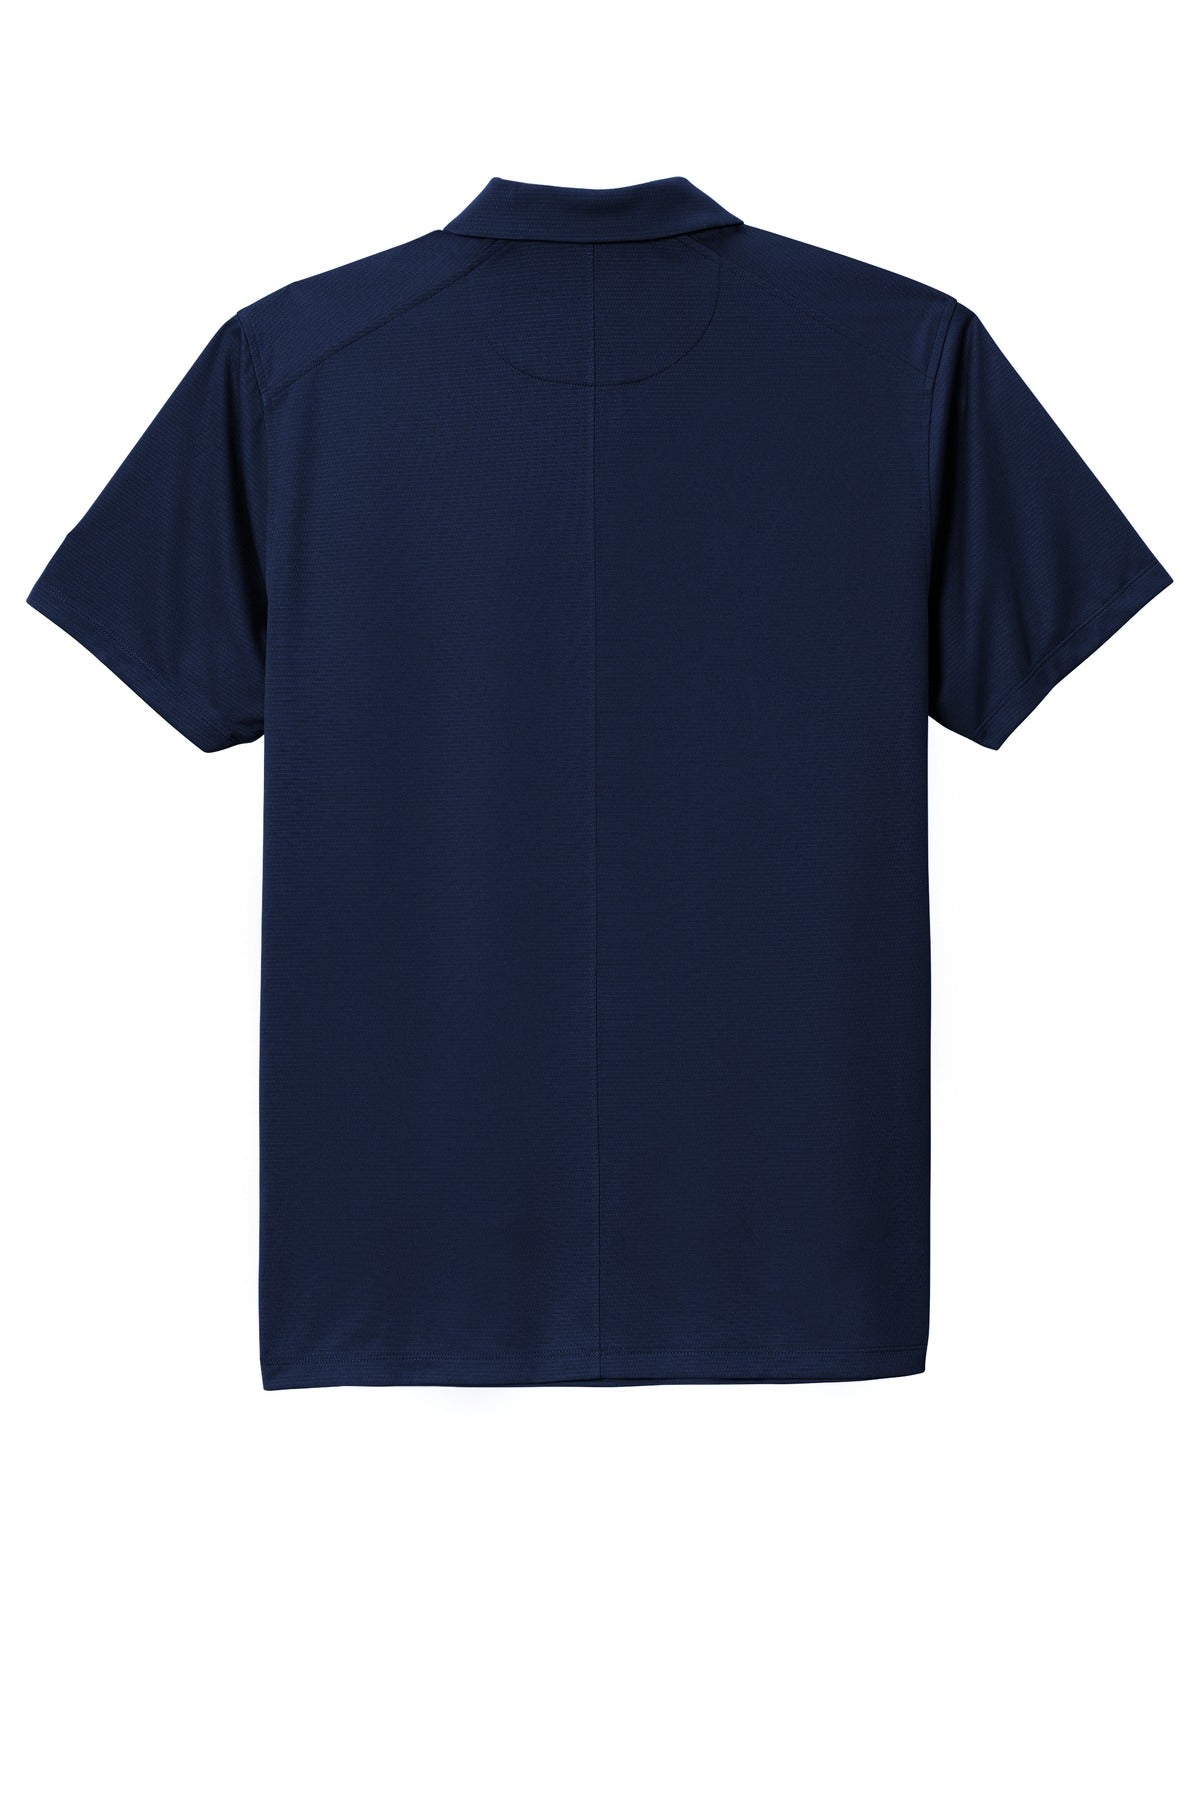 Nike Dry Essential Solid Polo NKBV6042 - BT Imprintables Shirts